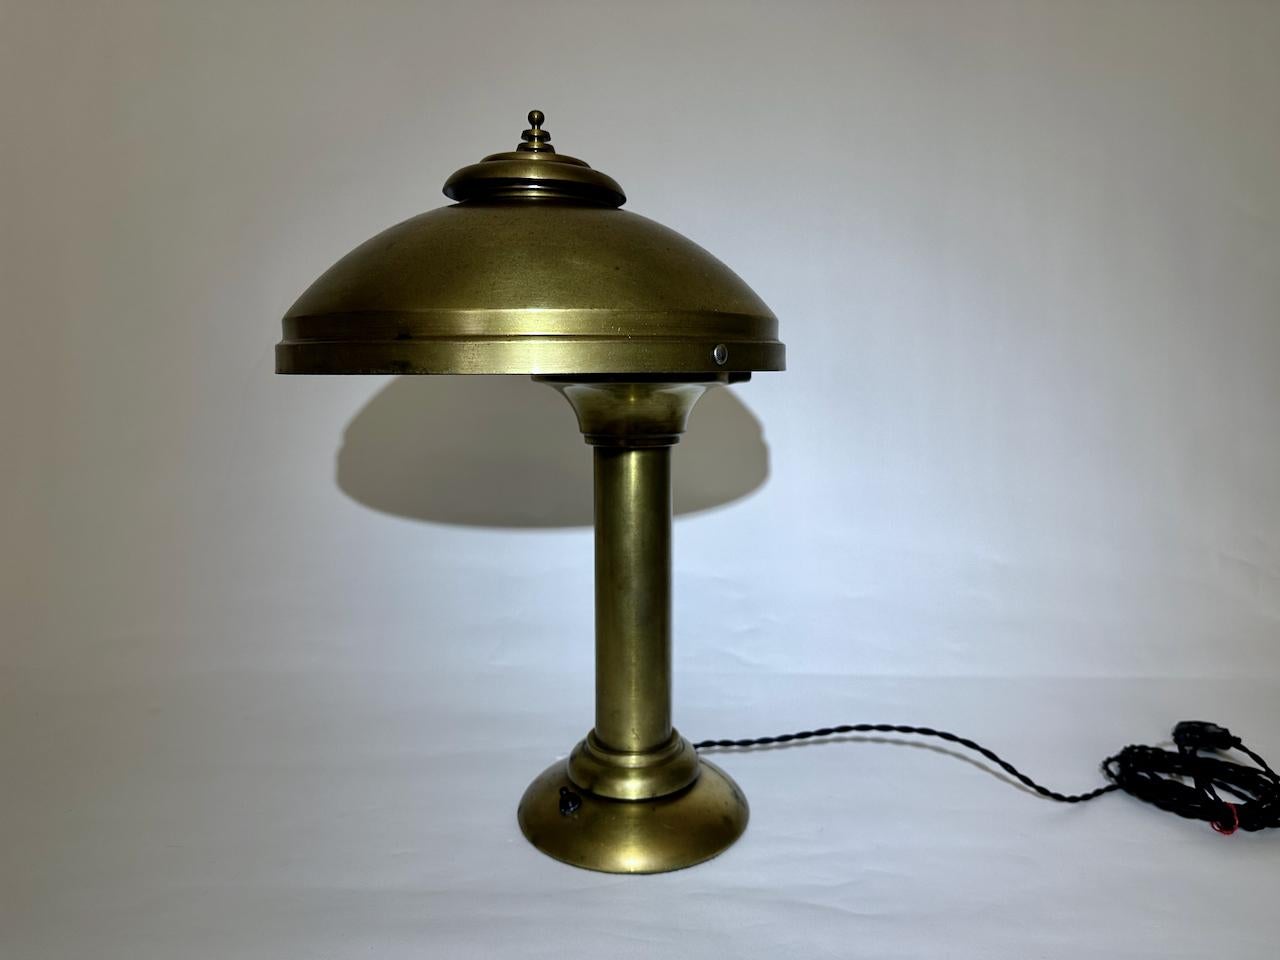 Fairies Mfg. Co. Brass Cantilever Desk Lamp, 1920s For Sale 2